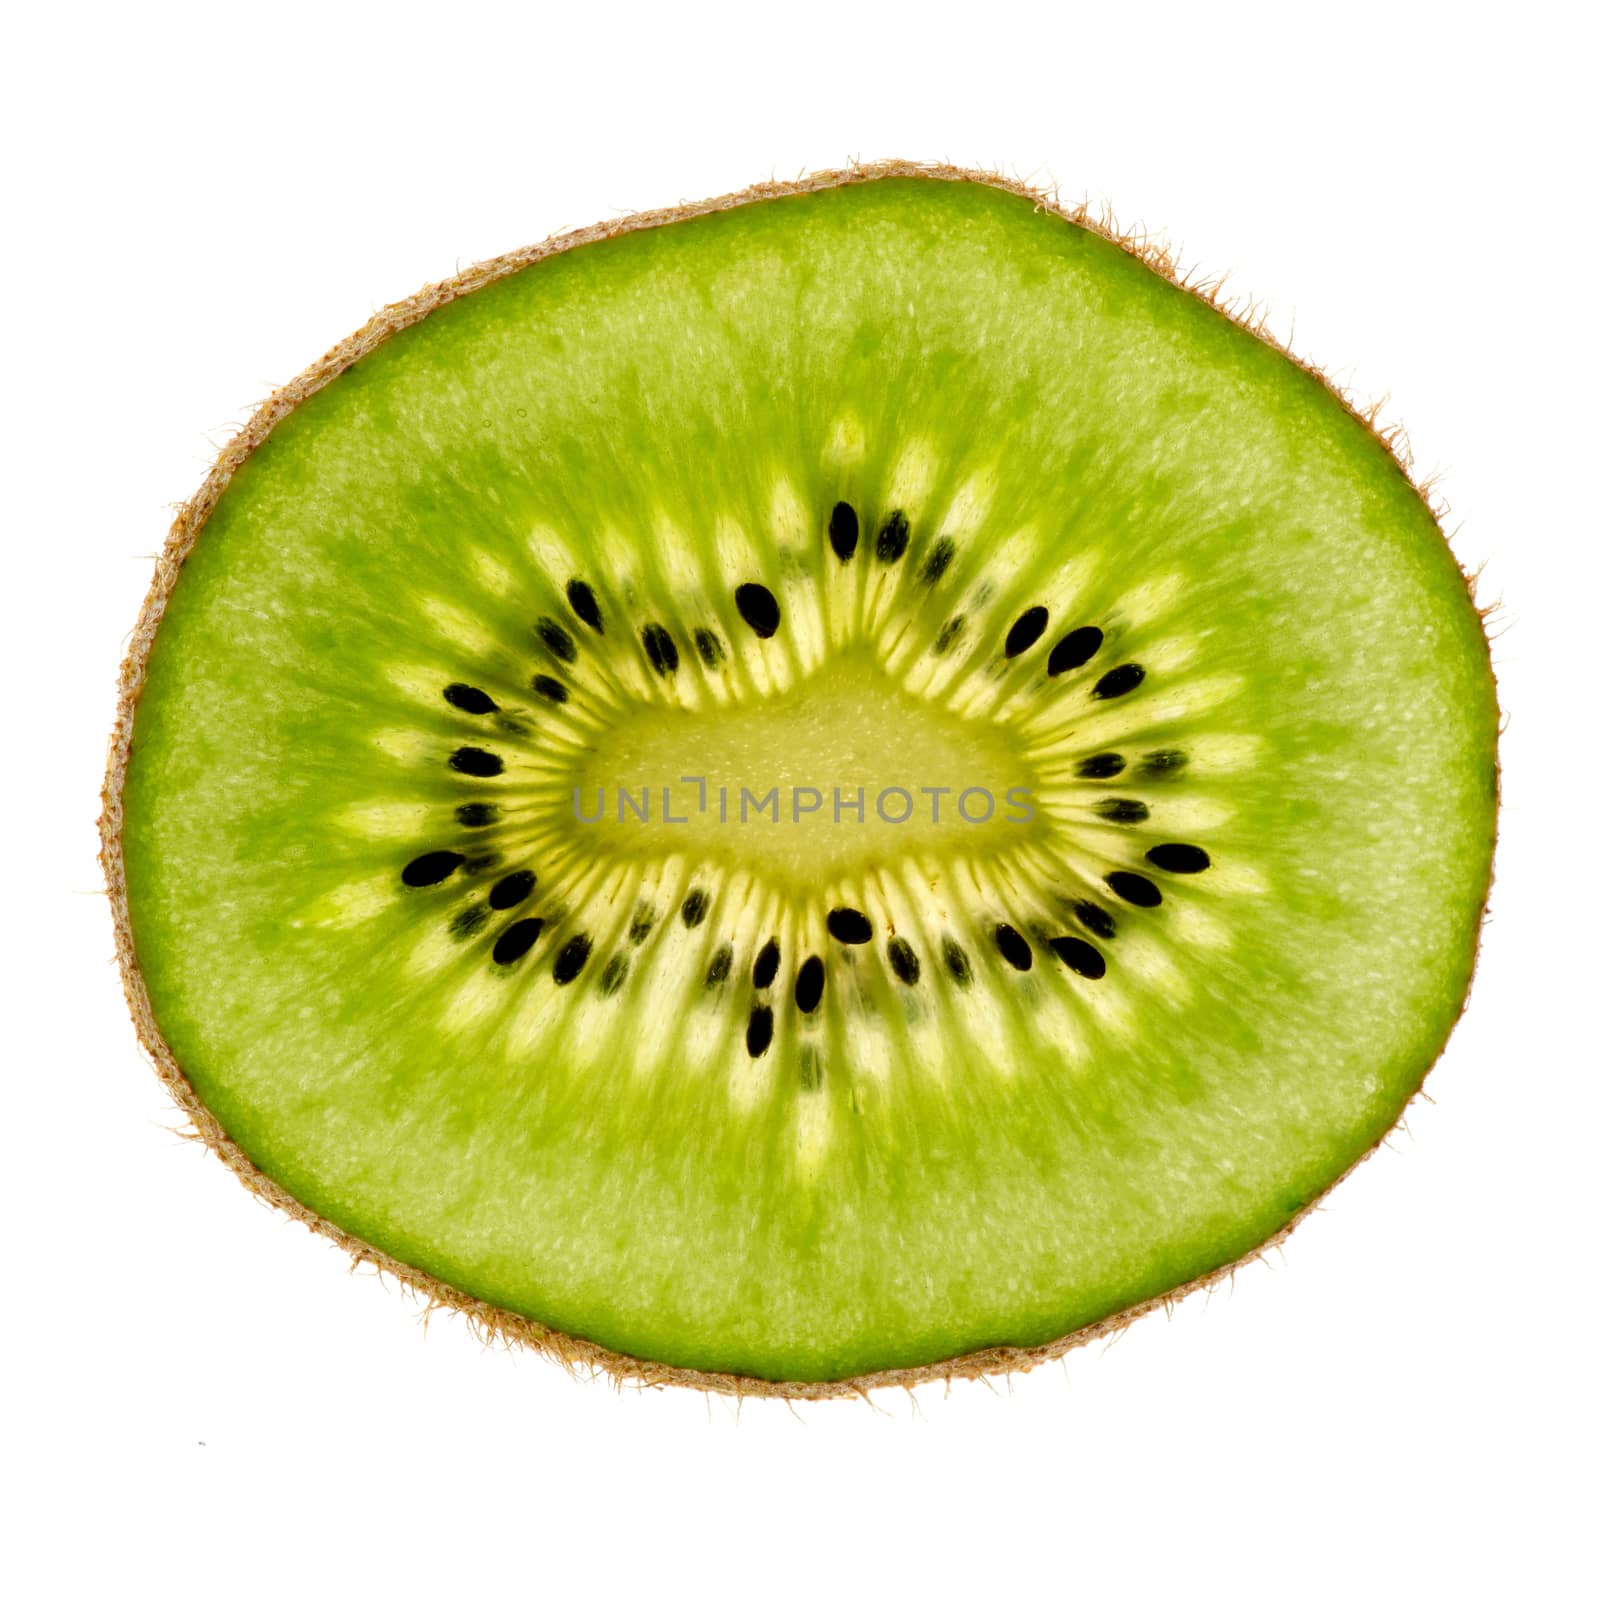 Kiwi fruit by richpav